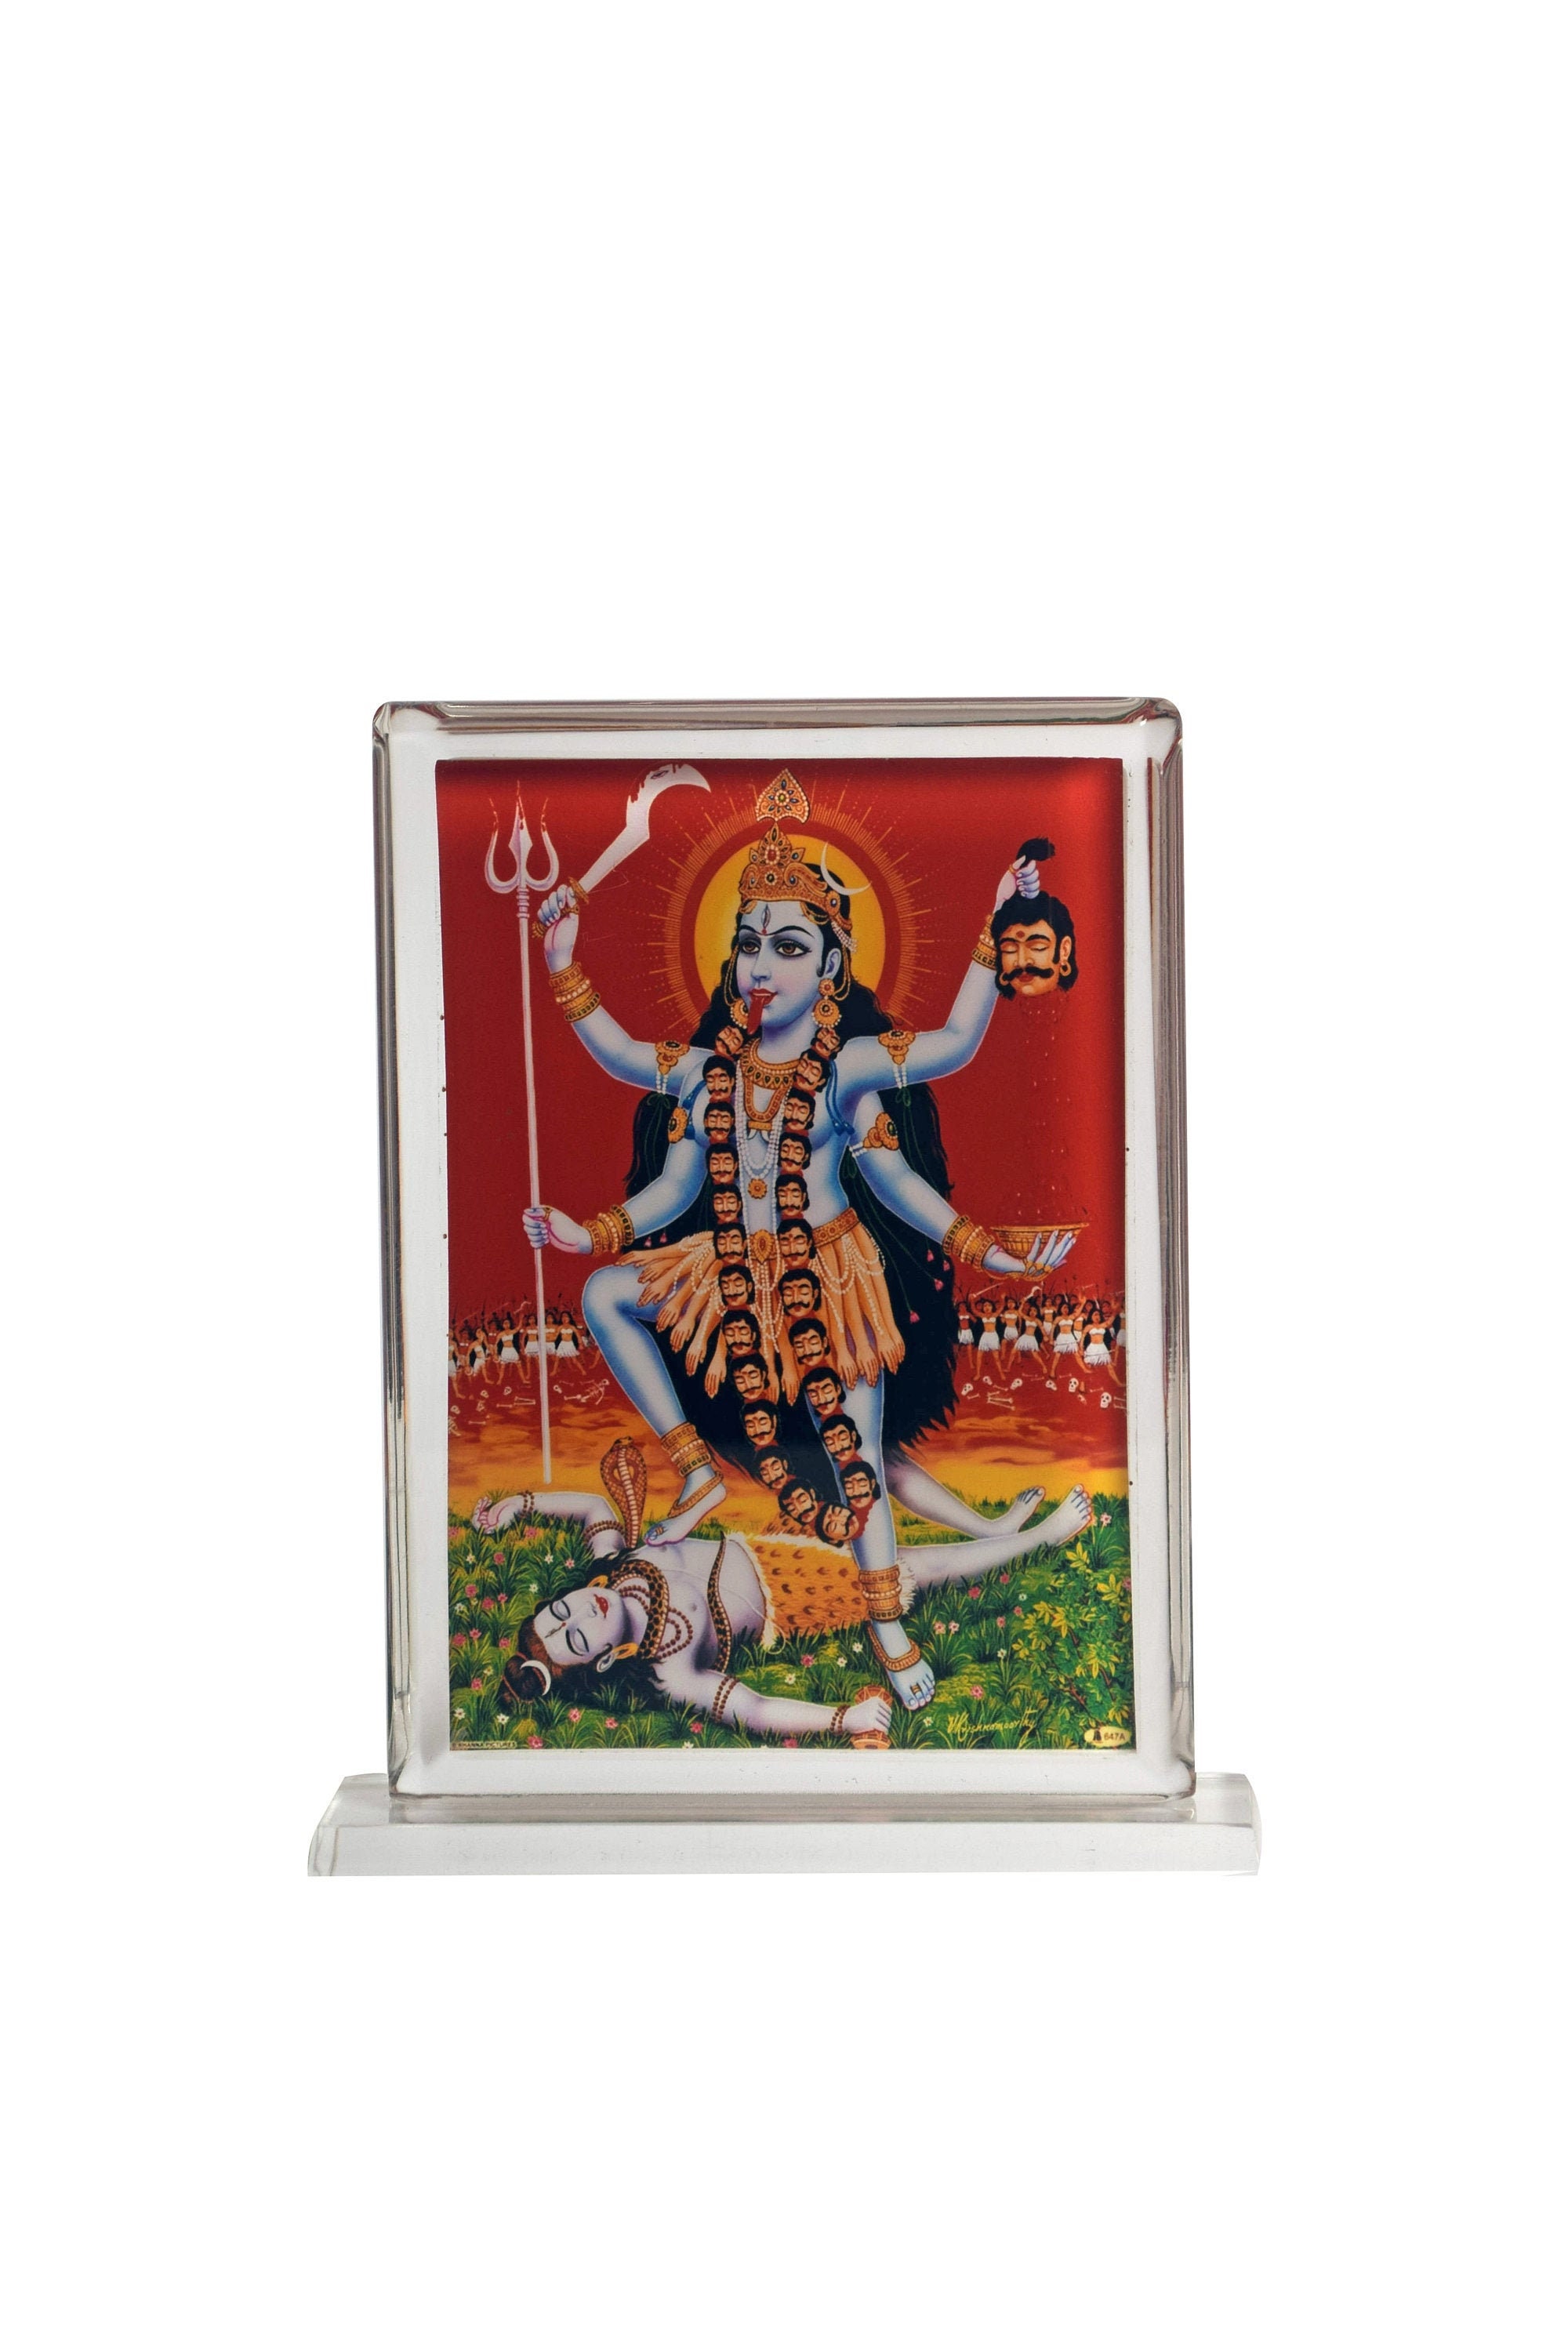 Bhadra kali  Kali goddess Mother kali Maa kali images